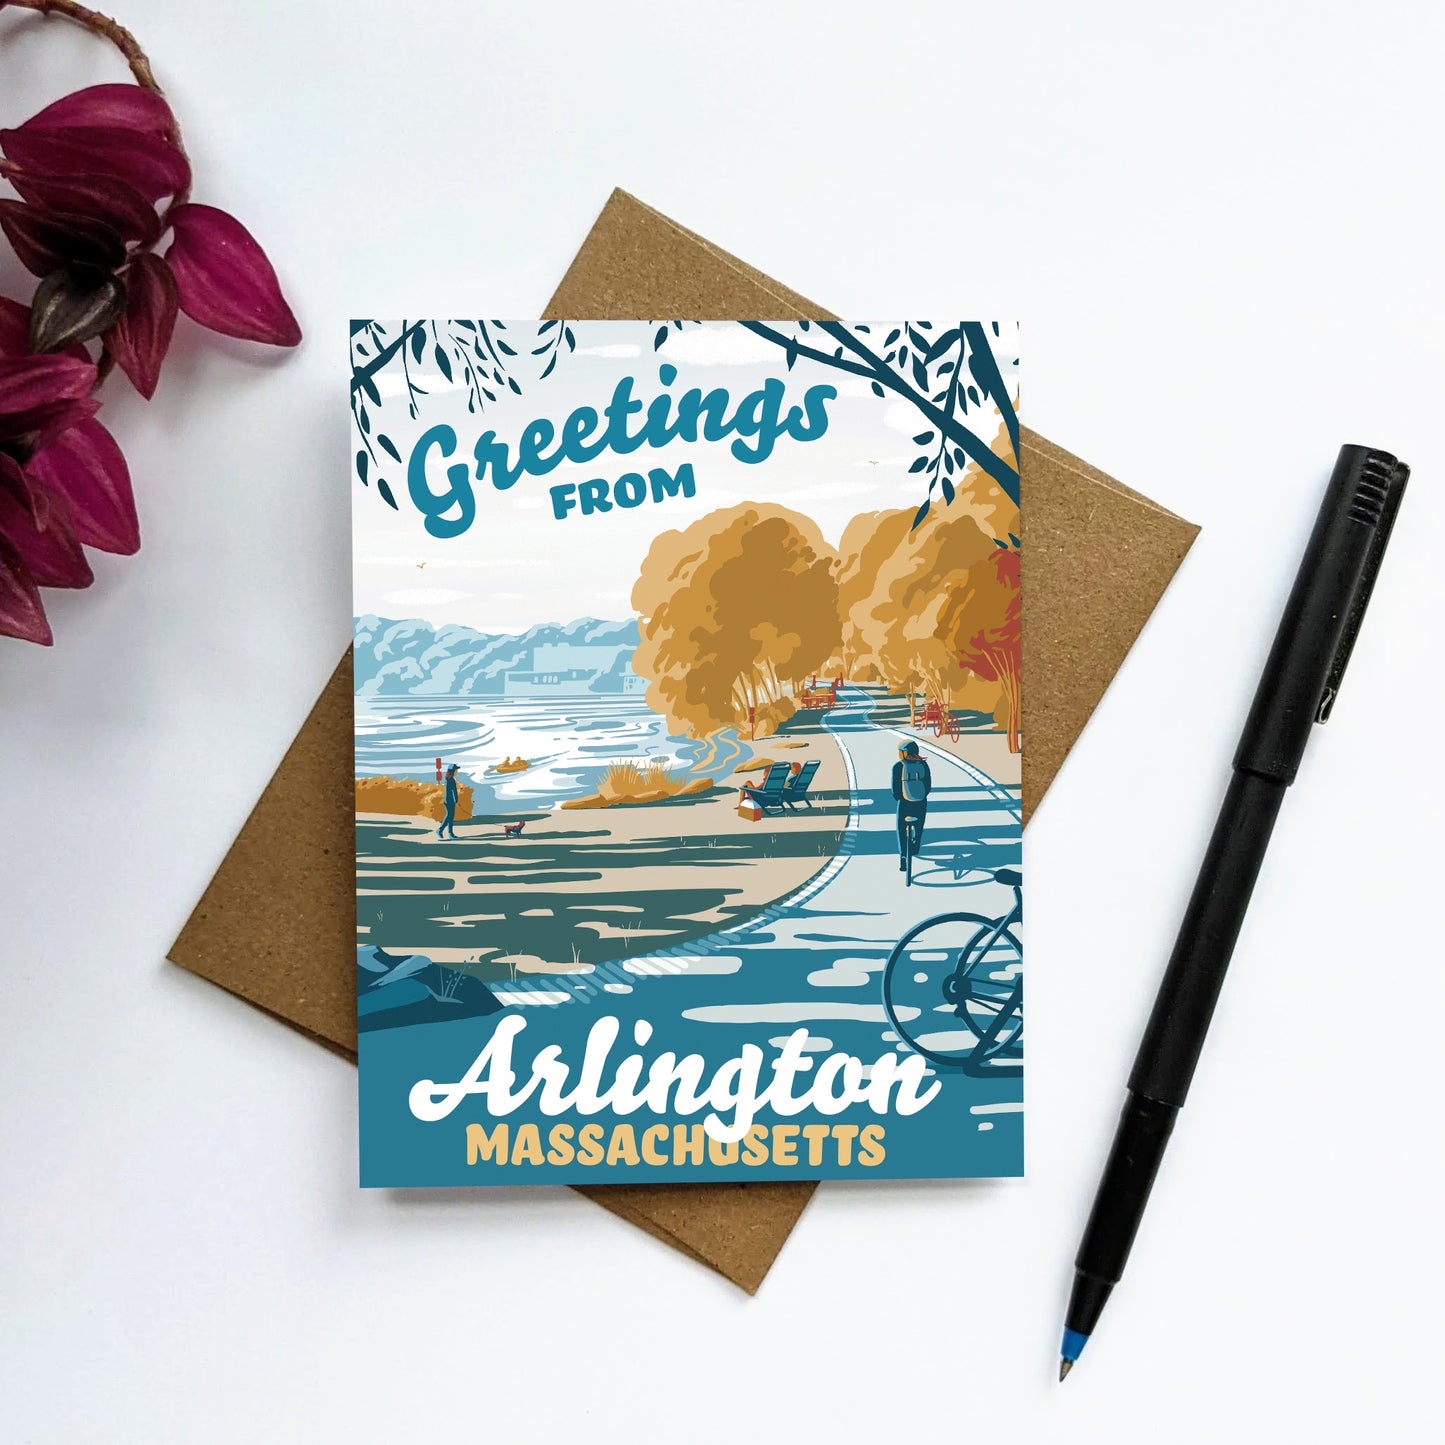 "Greetings from Arlington, Massachusetts" Greeting Card